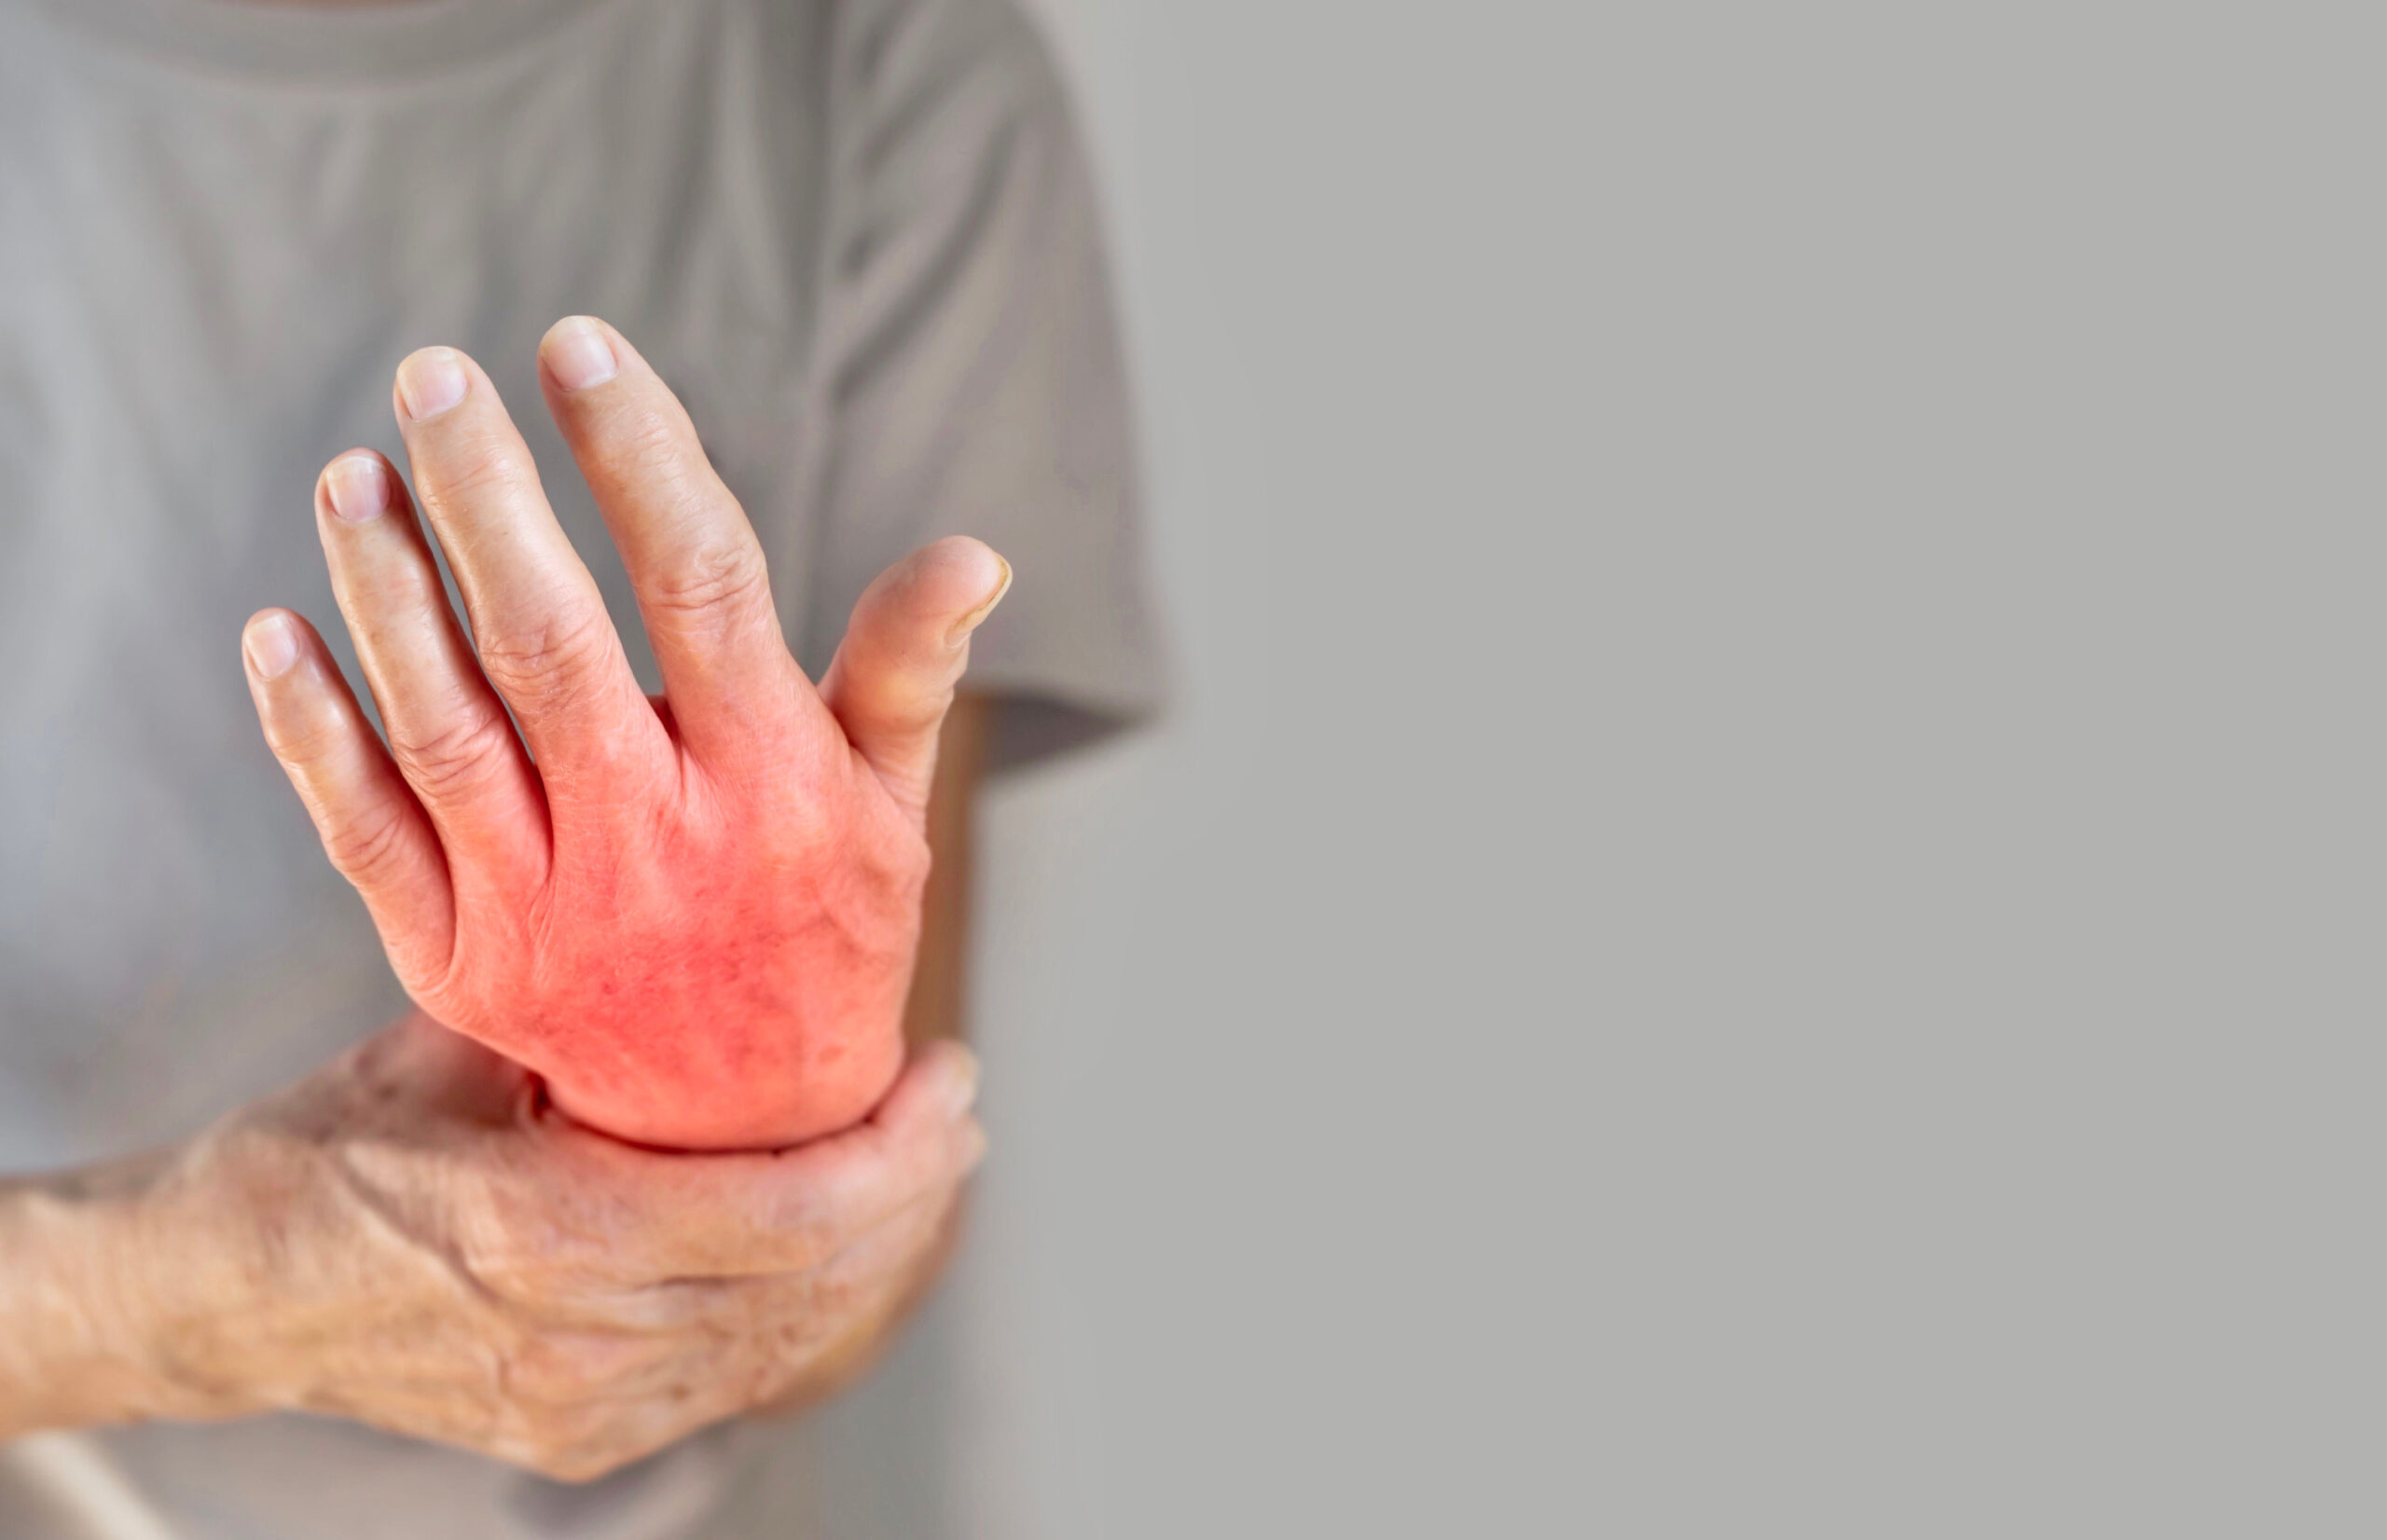 Hand joints inflammation. Concept of rheumatic arthritis, rheuma